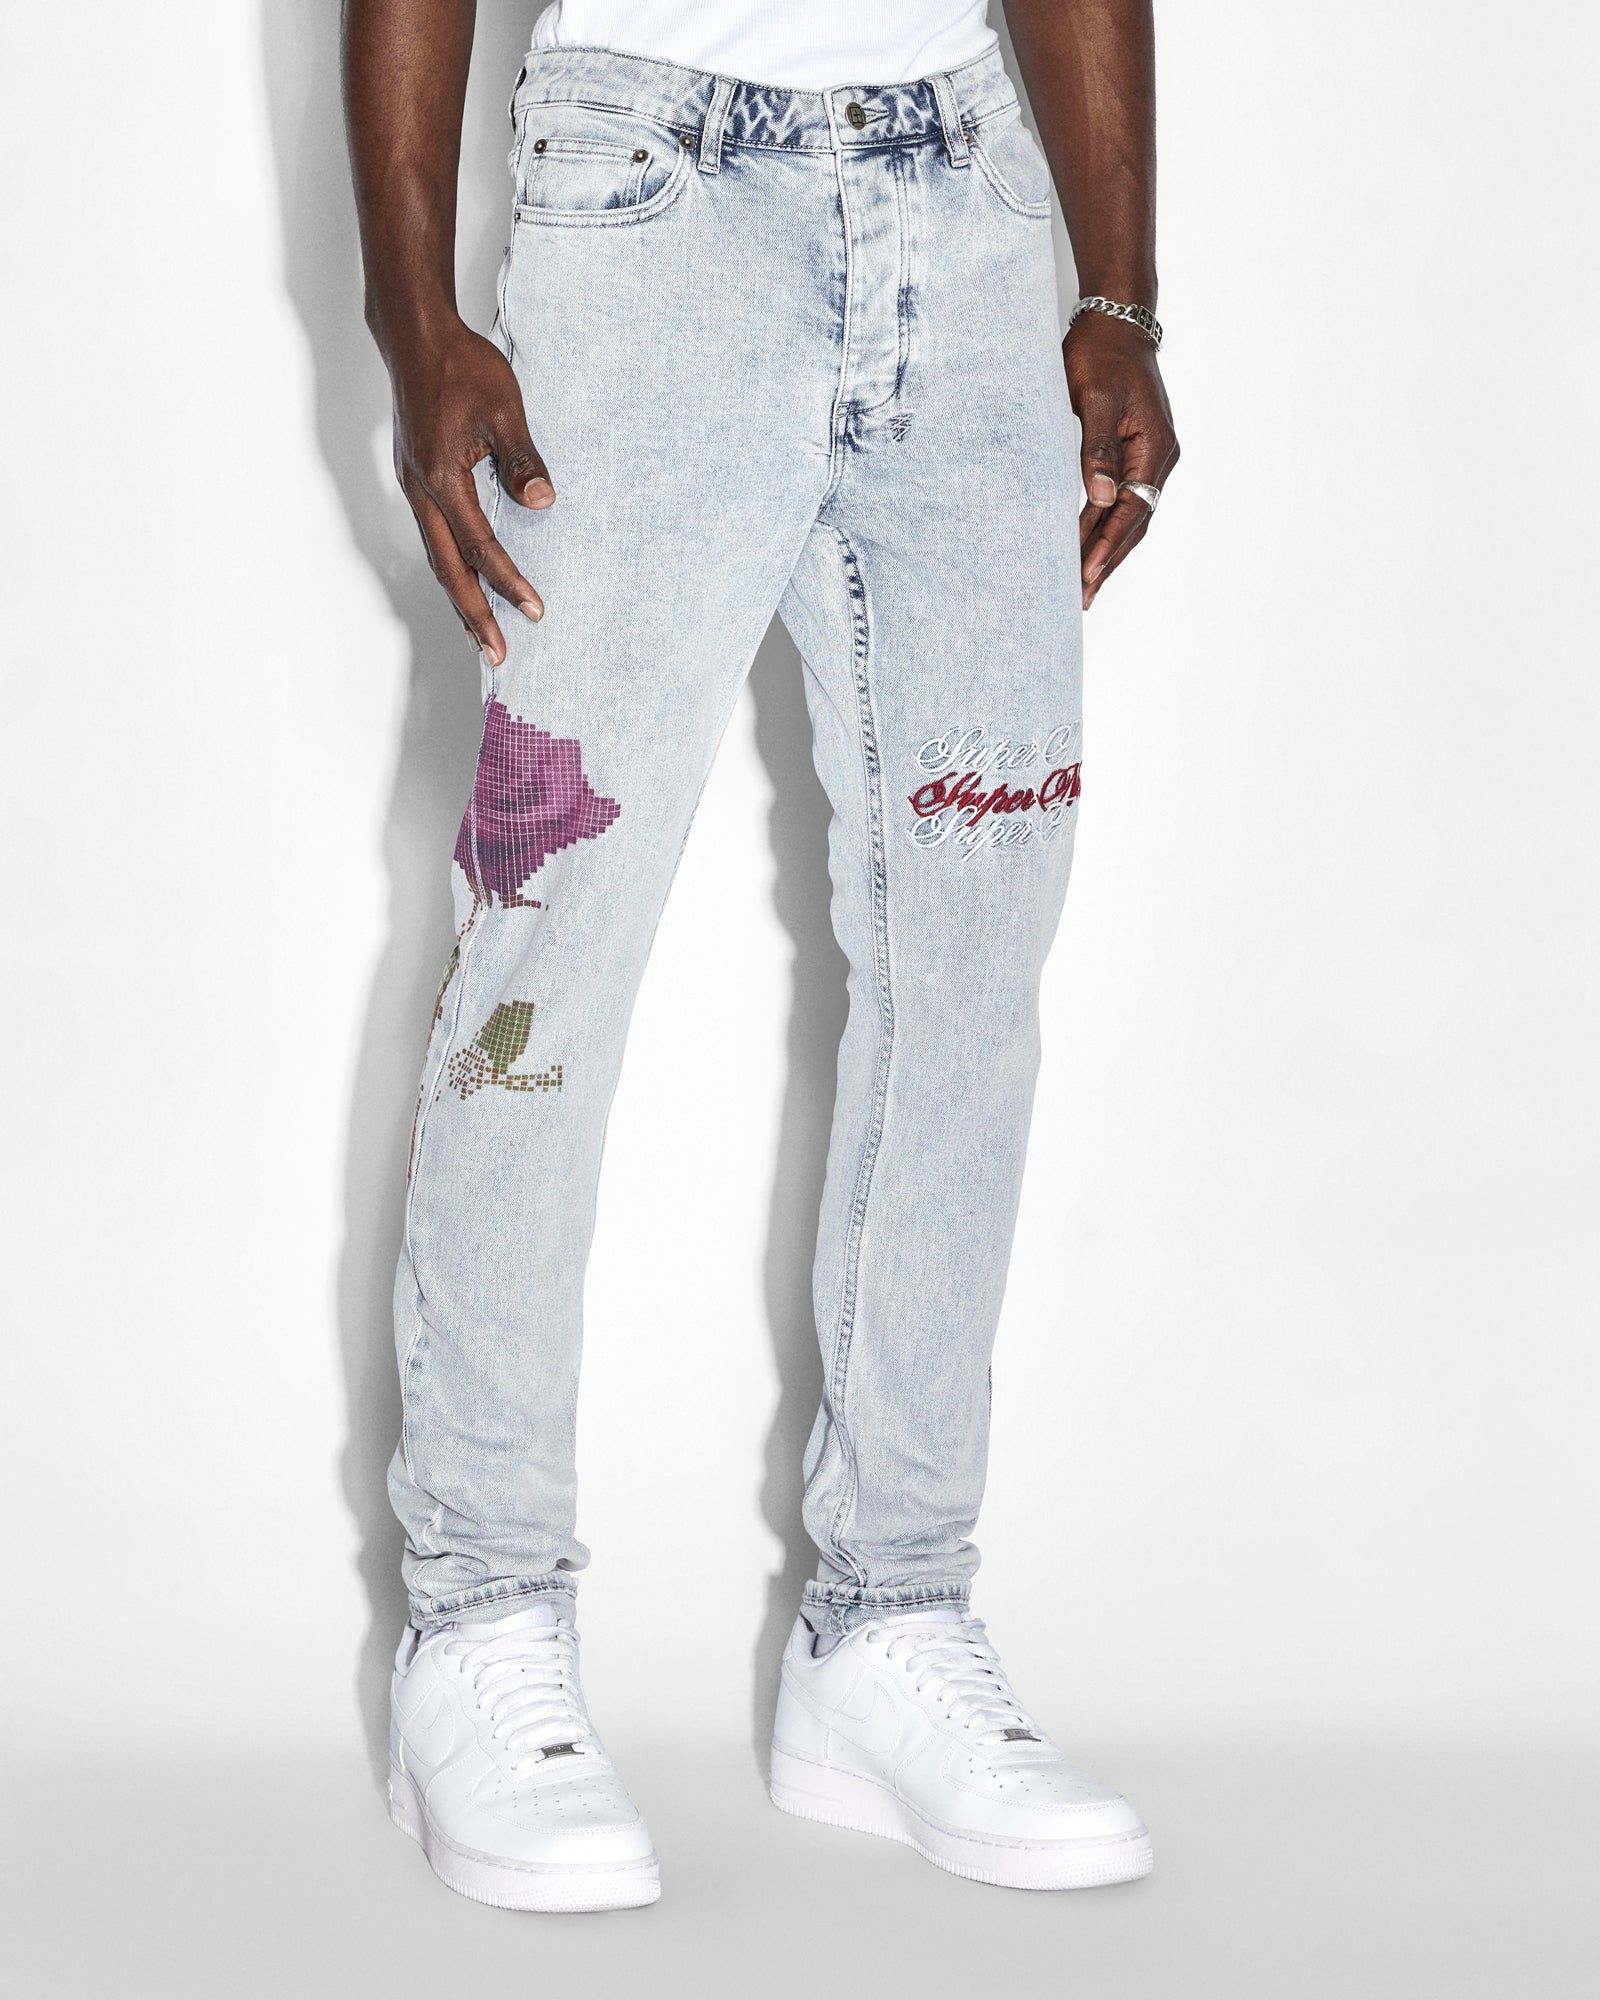 Streetwear Denim Clothes For Men: Men's Rockstar Jeans– Rockstar Original